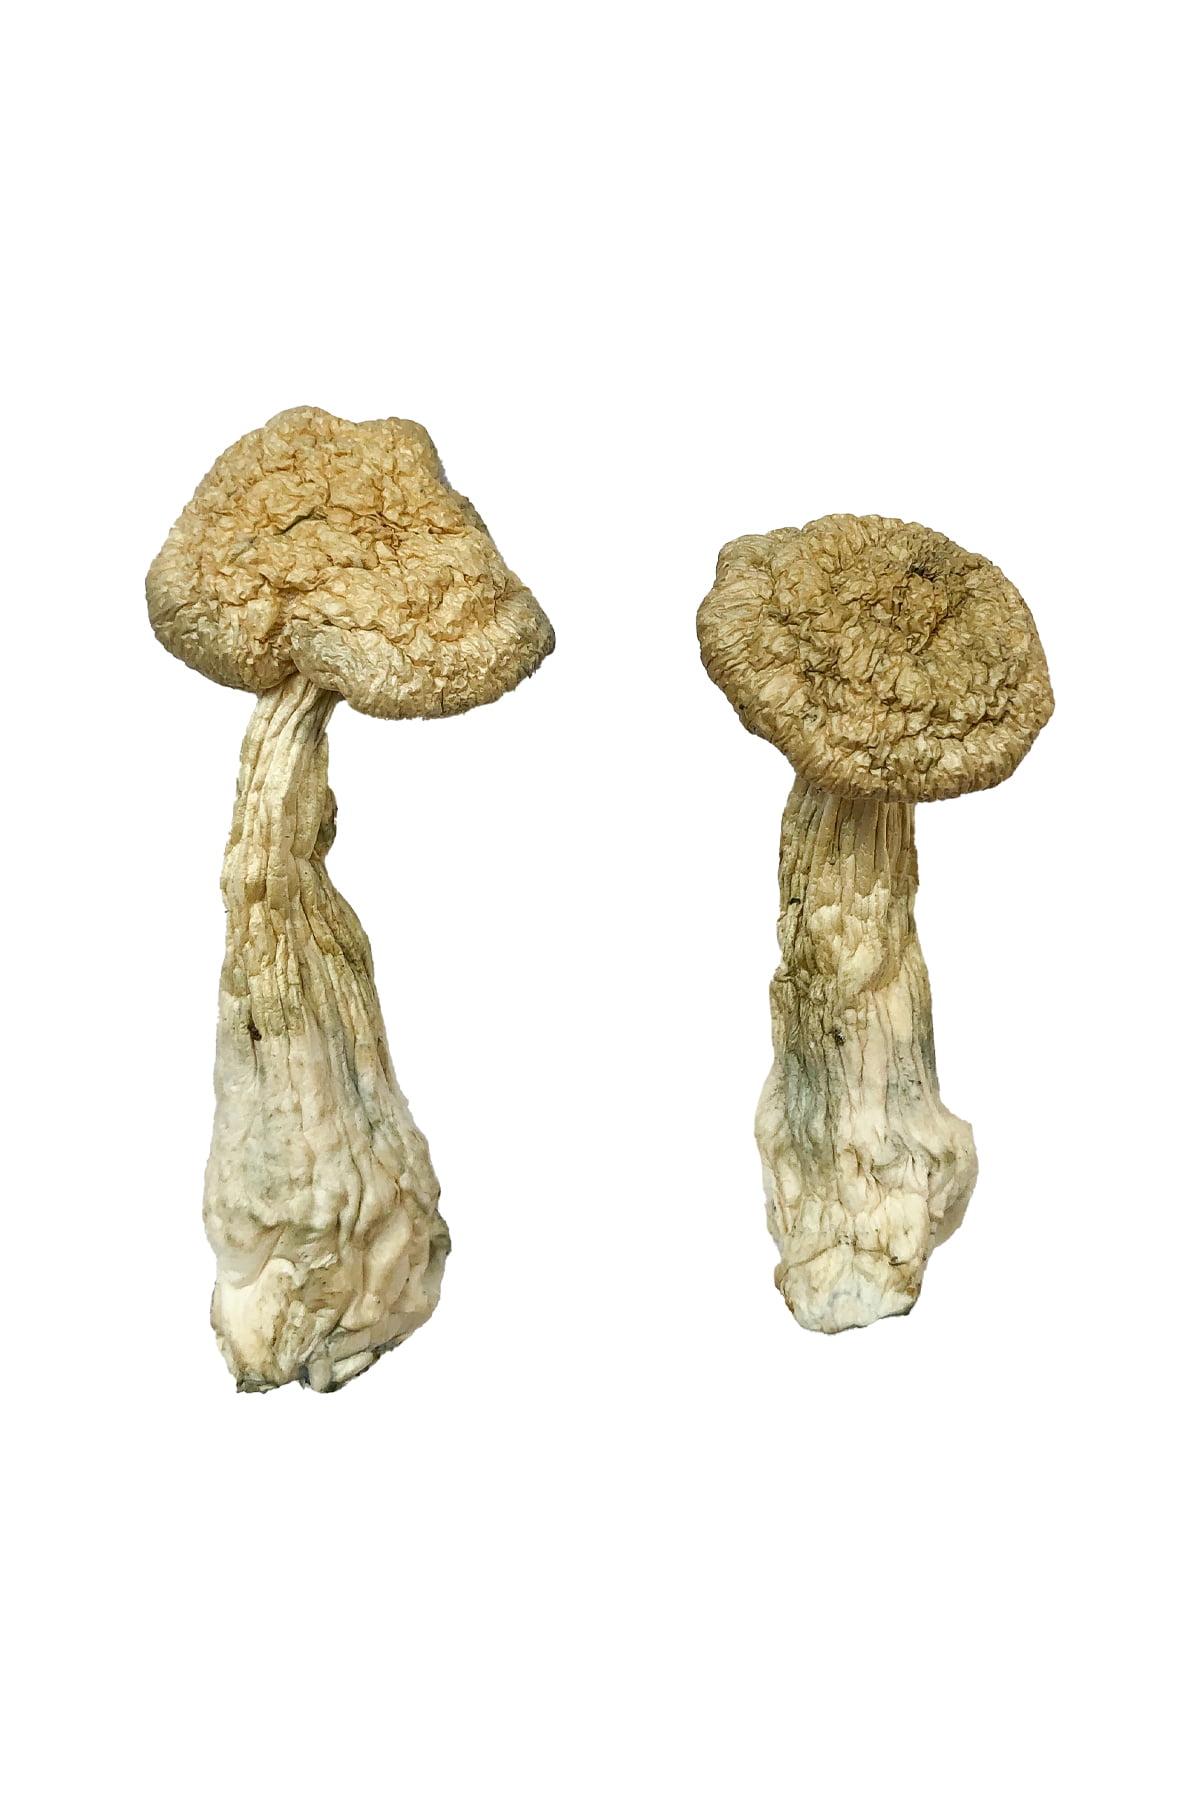 Buy Leucistic Burma Magic Mushrooms online